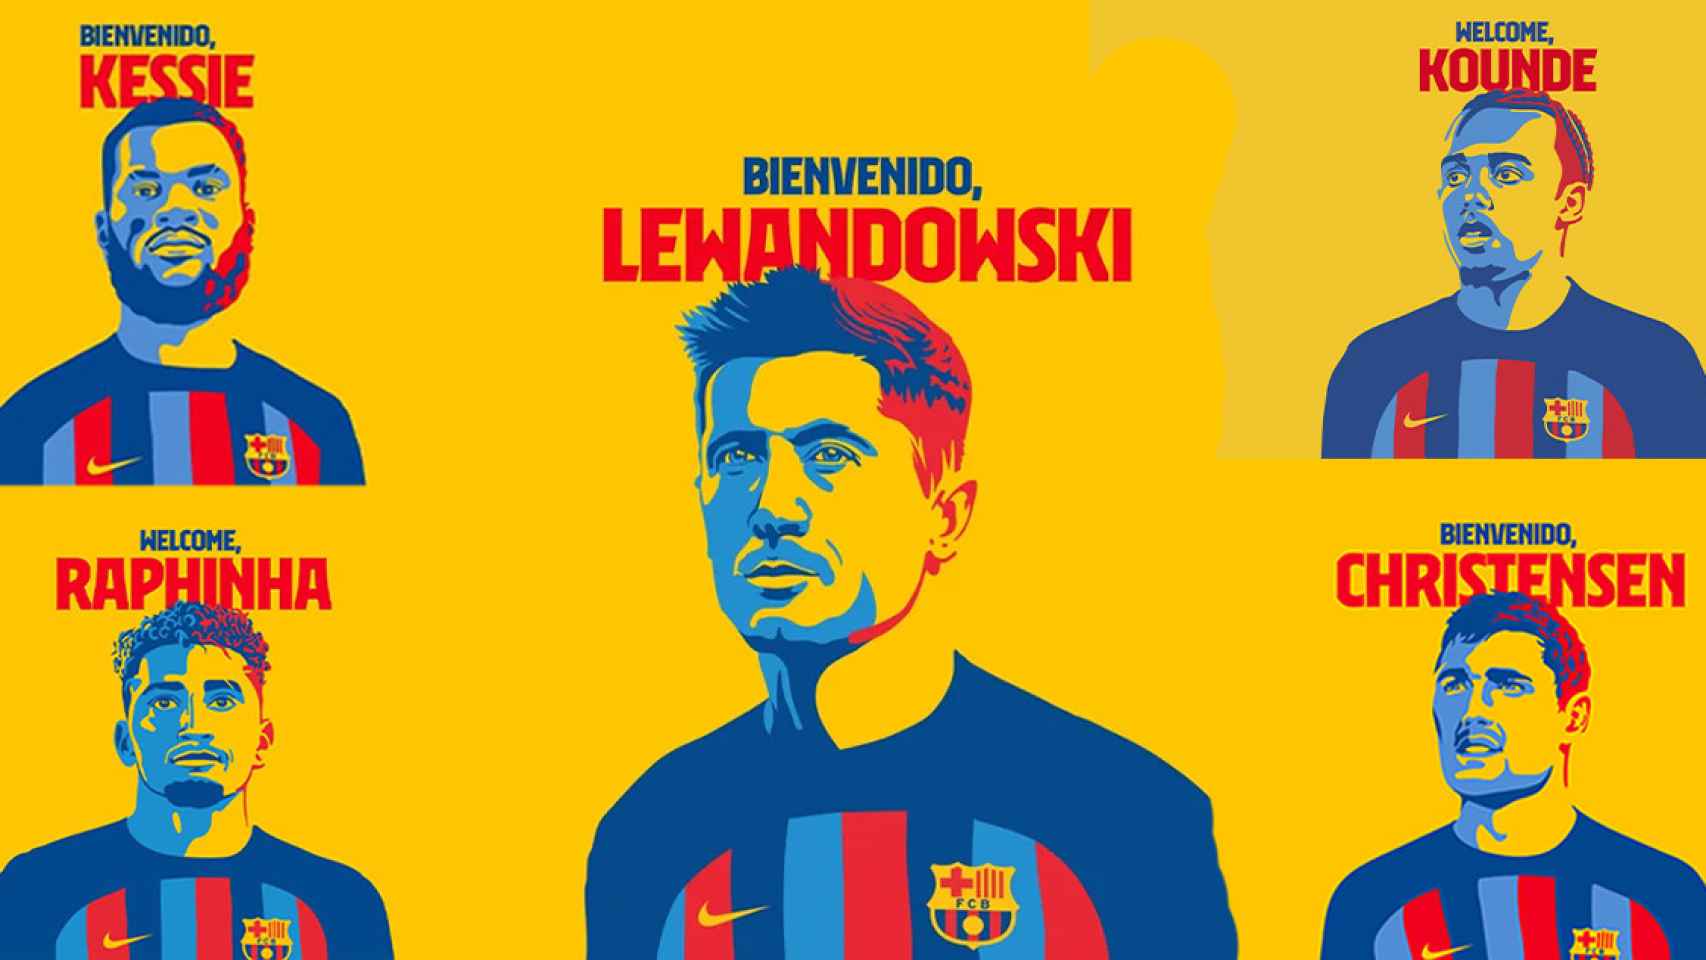 Kessie, Christensen, Raphinha, Lewandowski y Koundé, los nuevos fichajes del Barça de Laporta / CULEMANIA